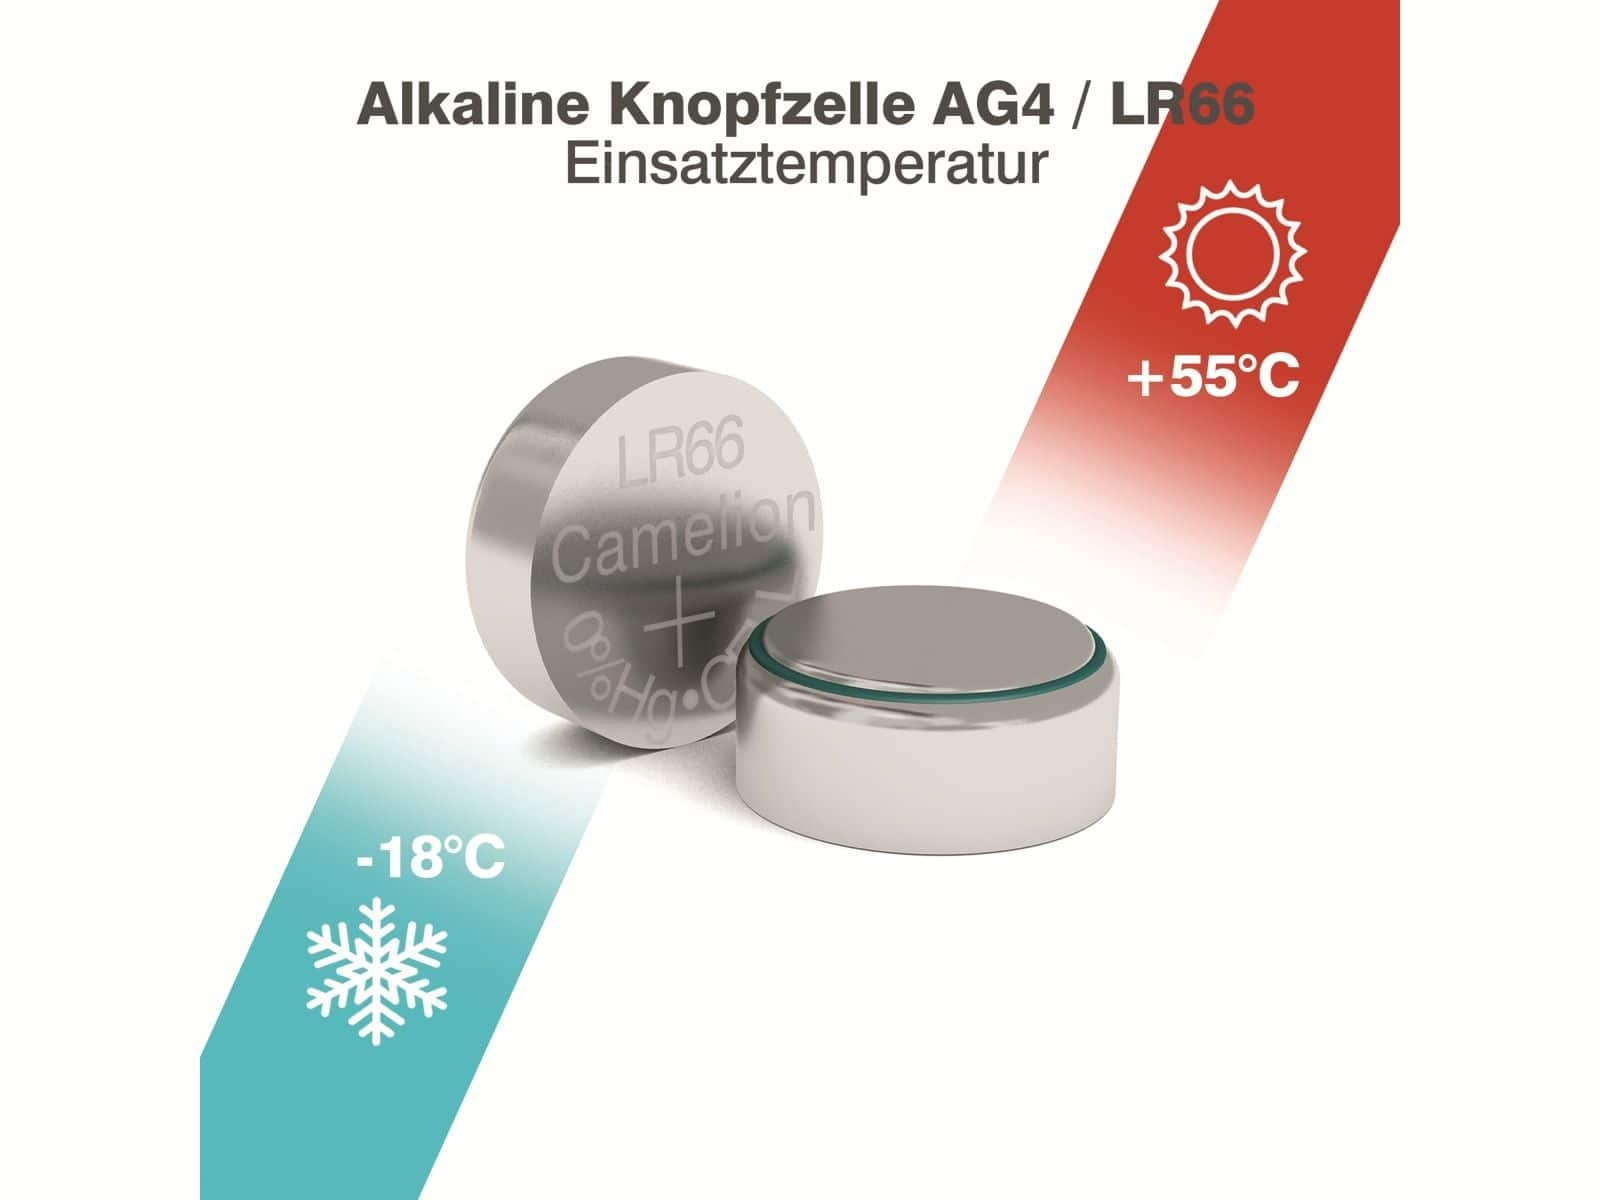 St. Alkaline CAMELION Knopfzelle AG4, Knopfzelle 2